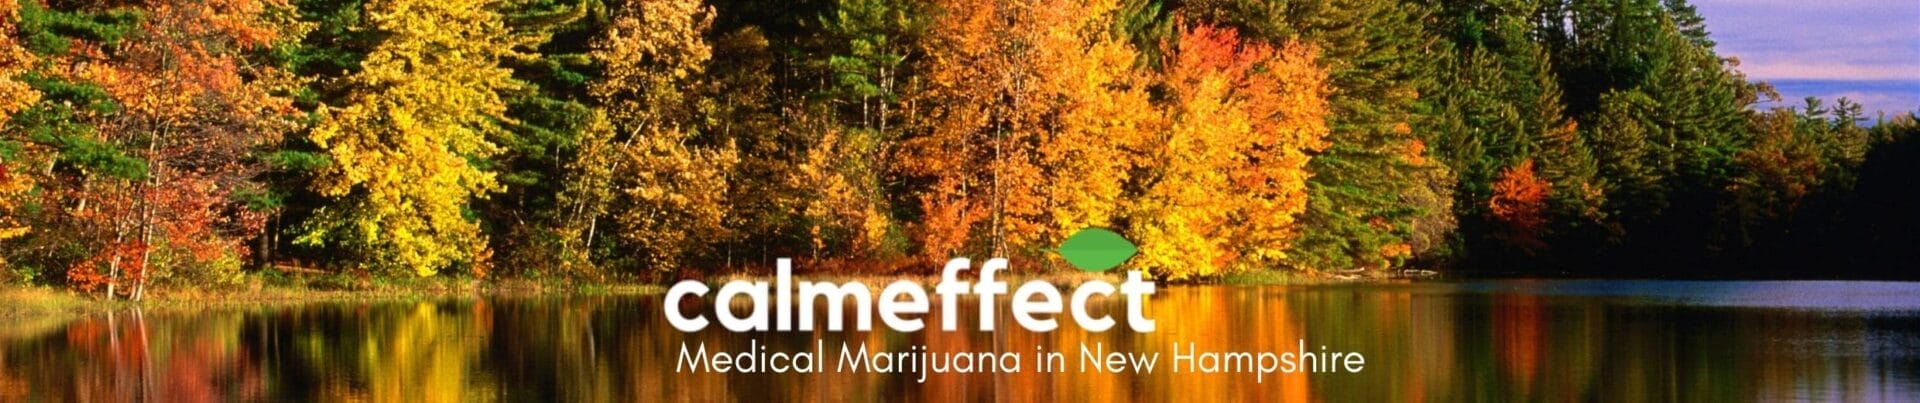 Medical Marijuana in New Hampshire